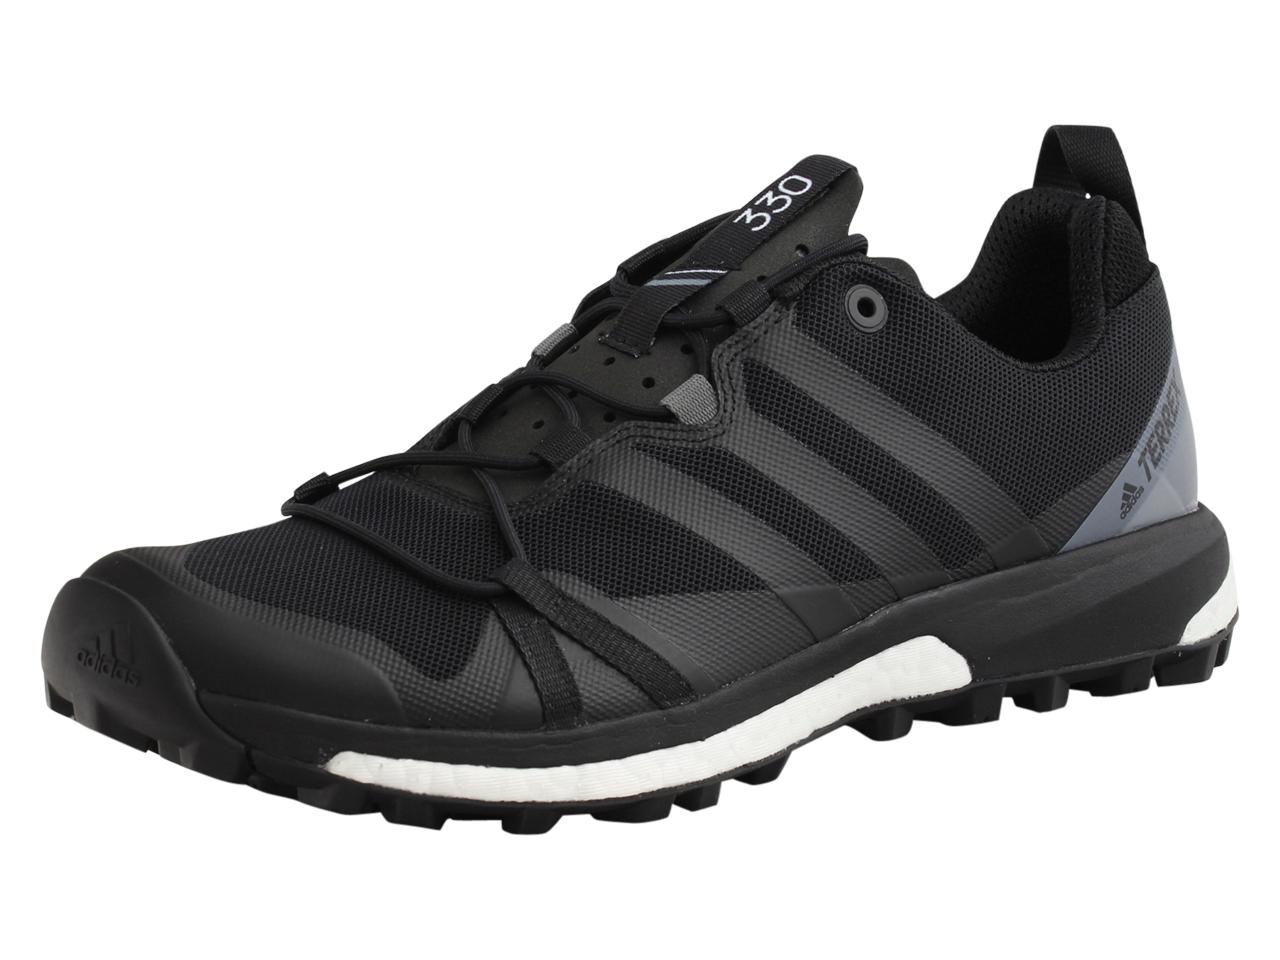 Adidas Men's Terrex Agravic All Terrain Trail Running Sneakers Shoes - Black - 12 D(M) US